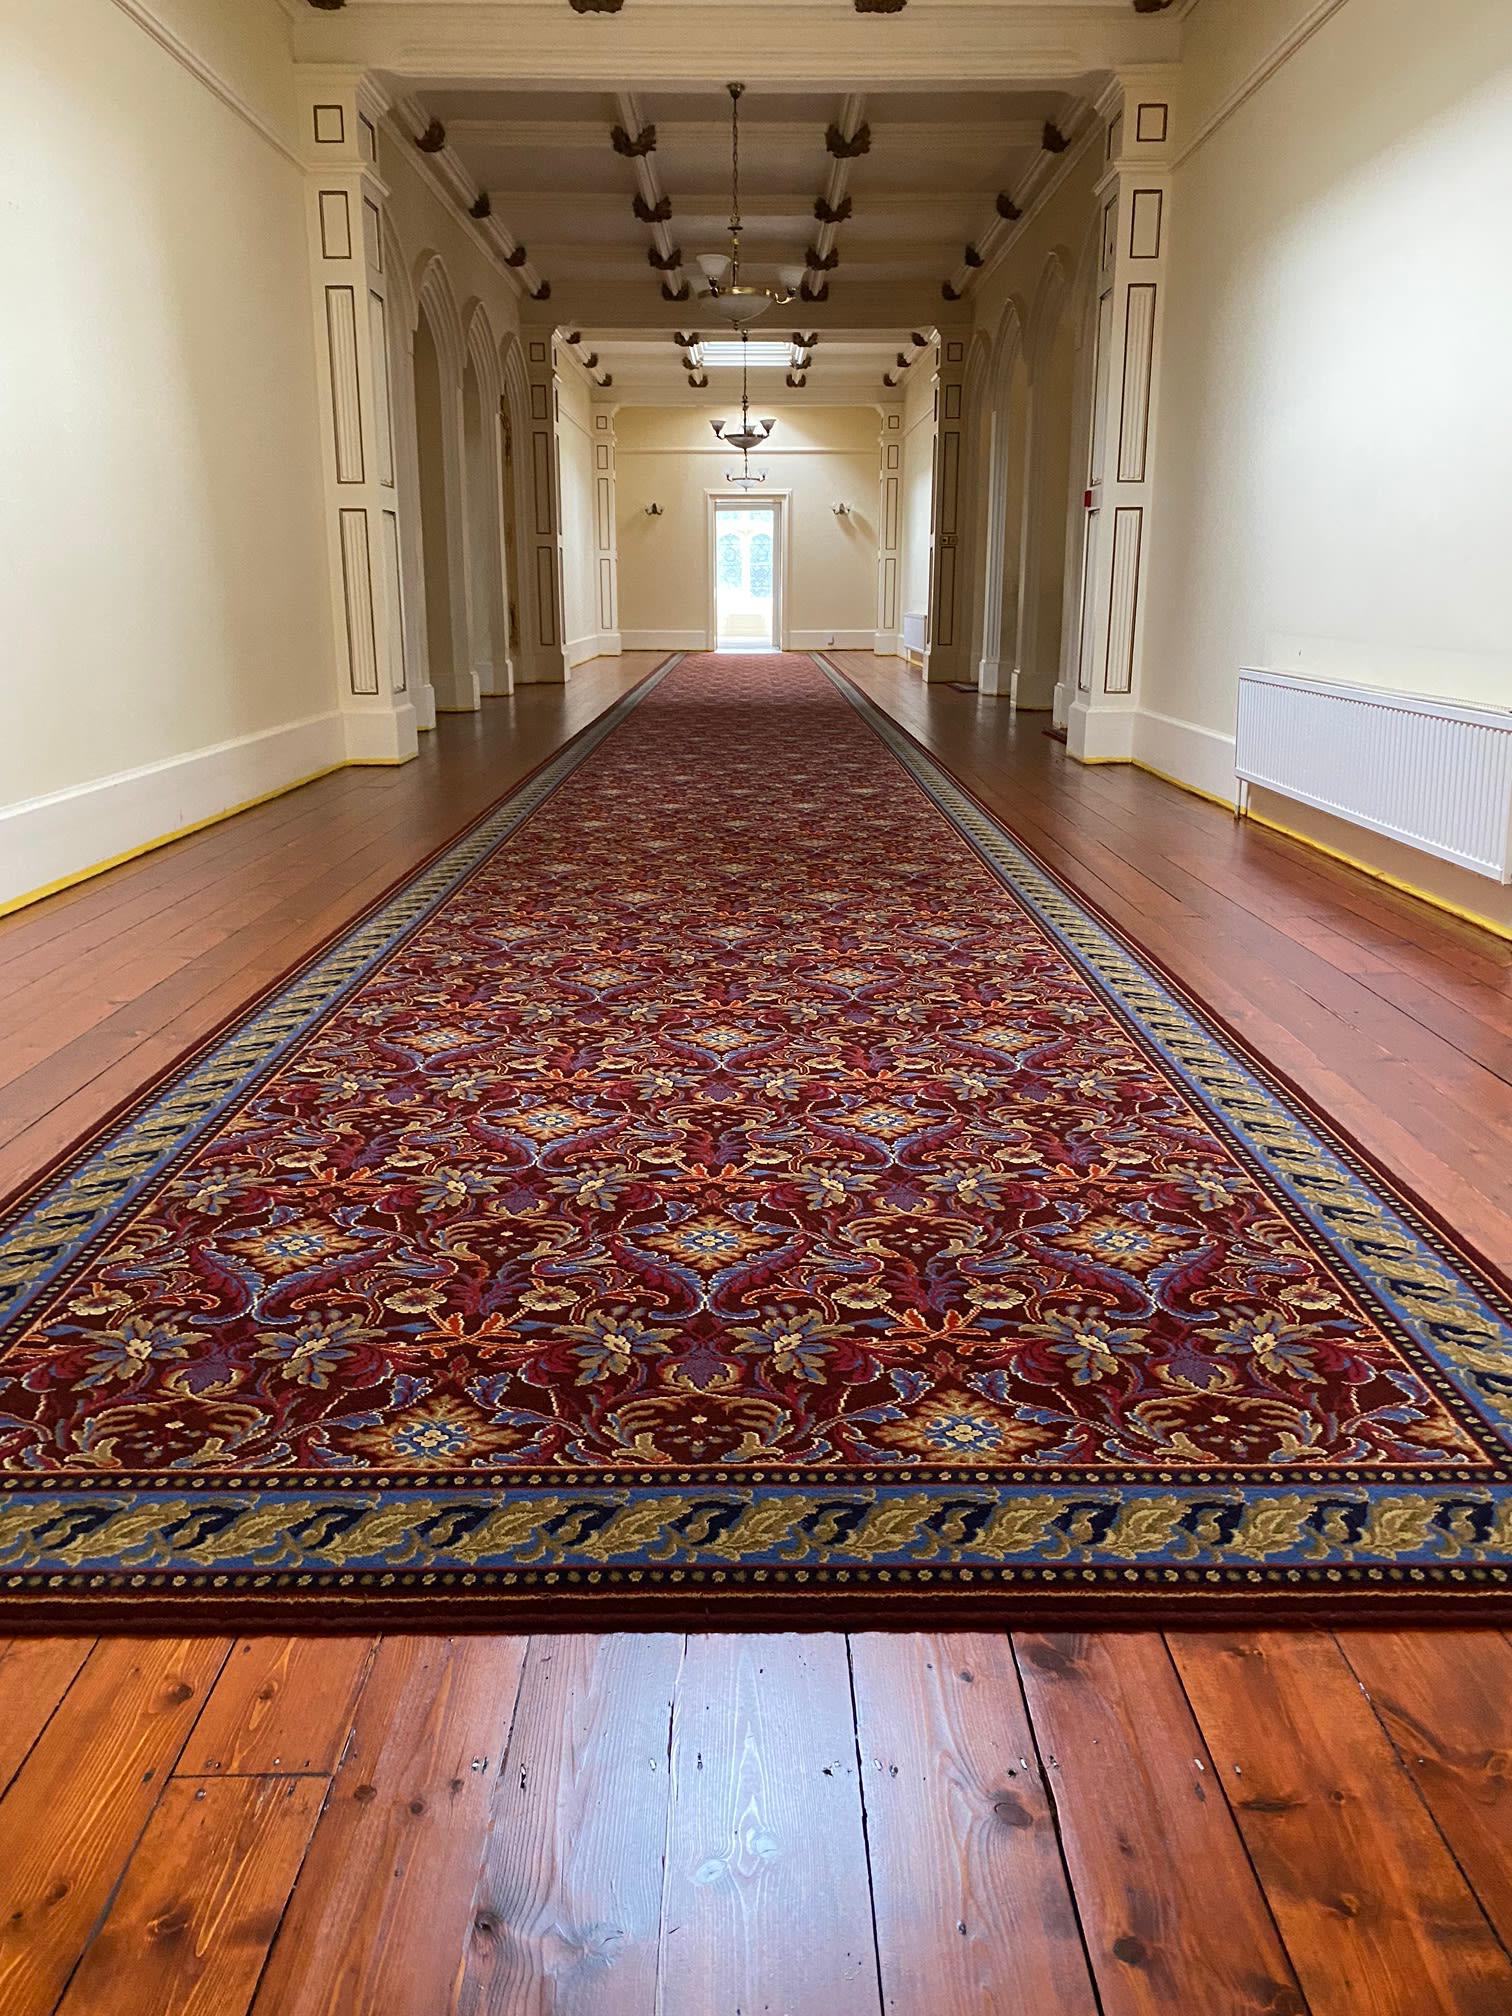 Images Plymstock Carpets & Flooring Ltd